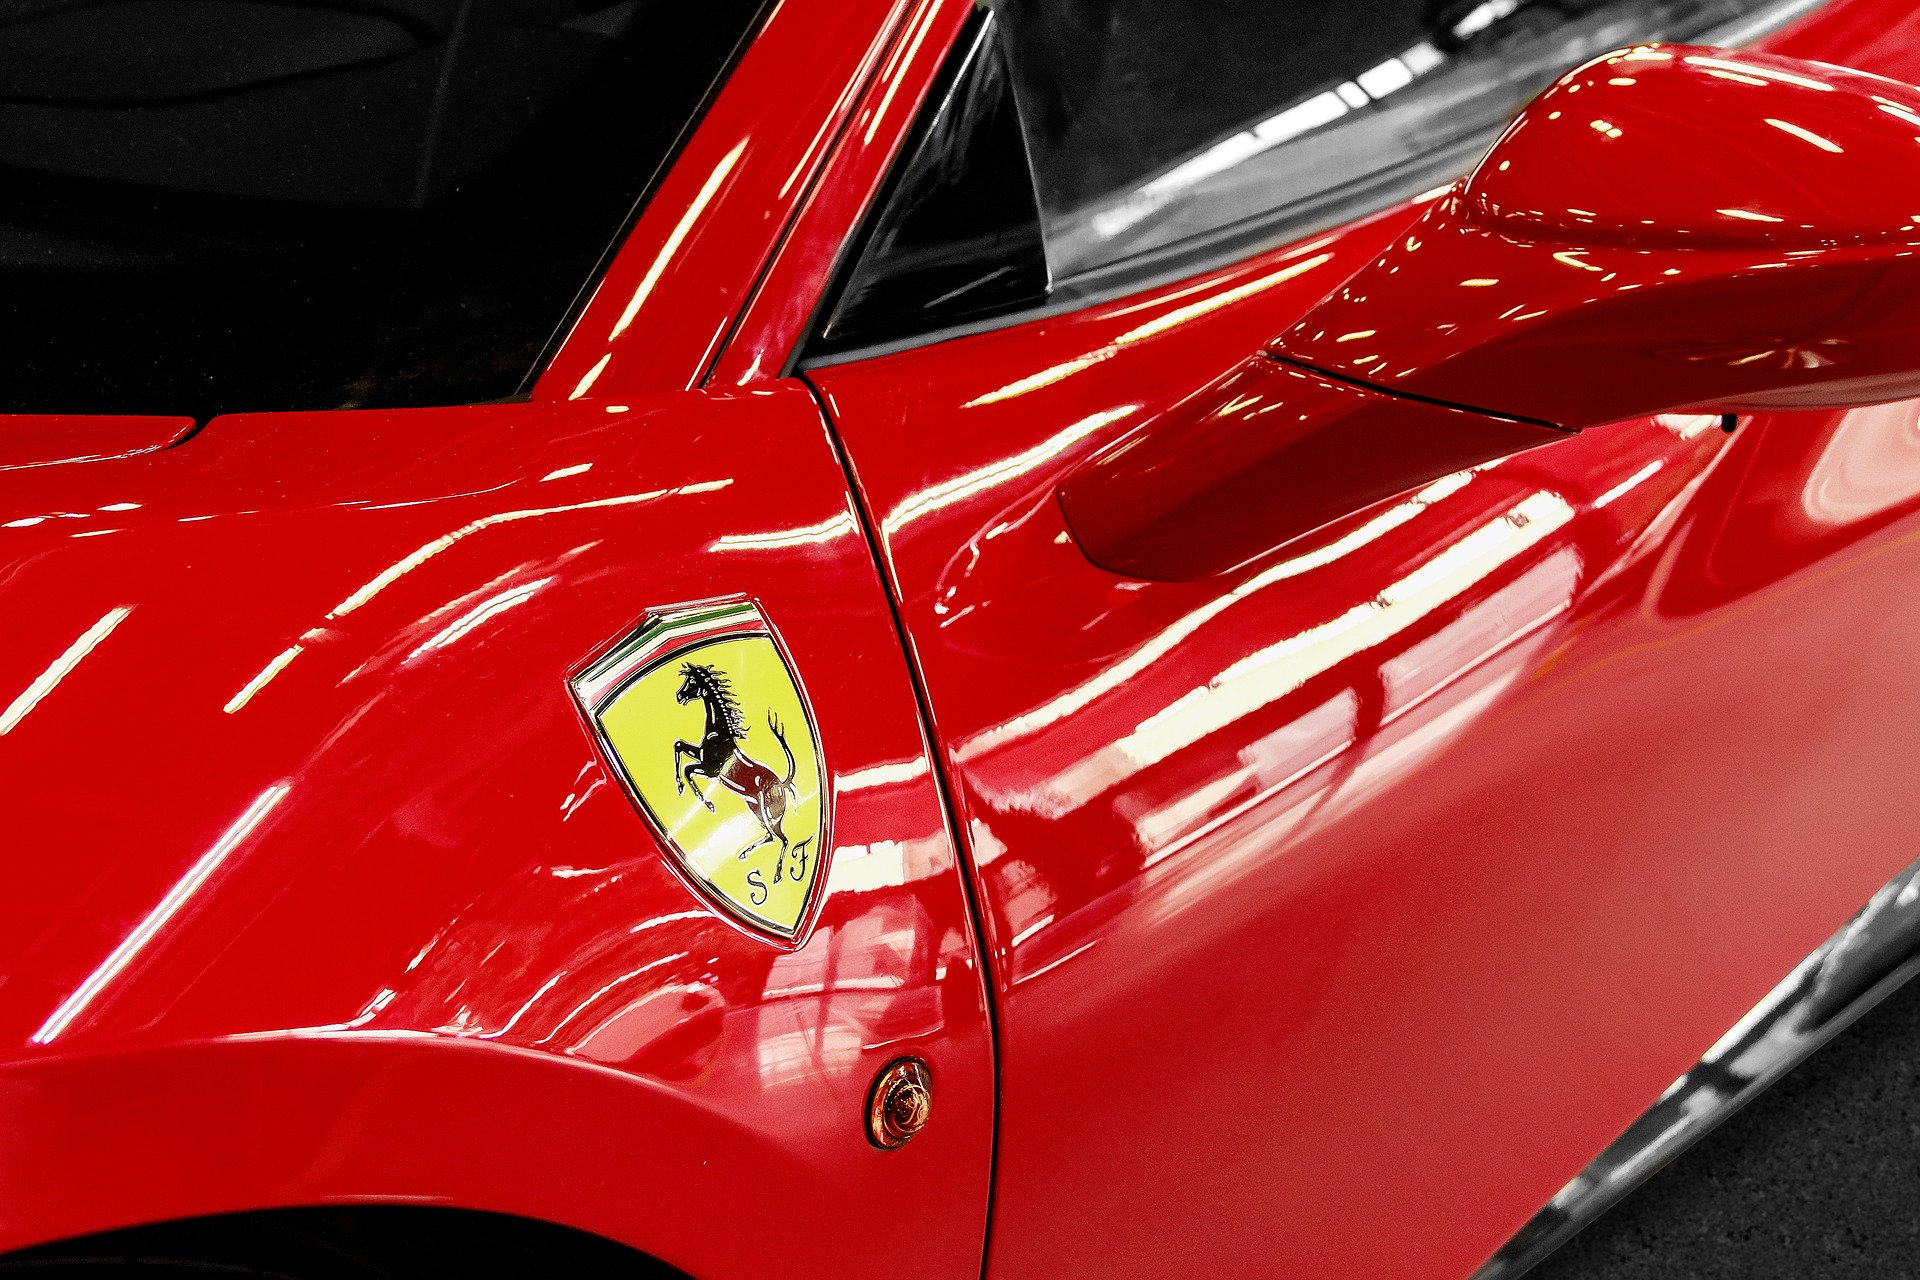 Ferrari Customer Data Exposed by Ransomware Attack